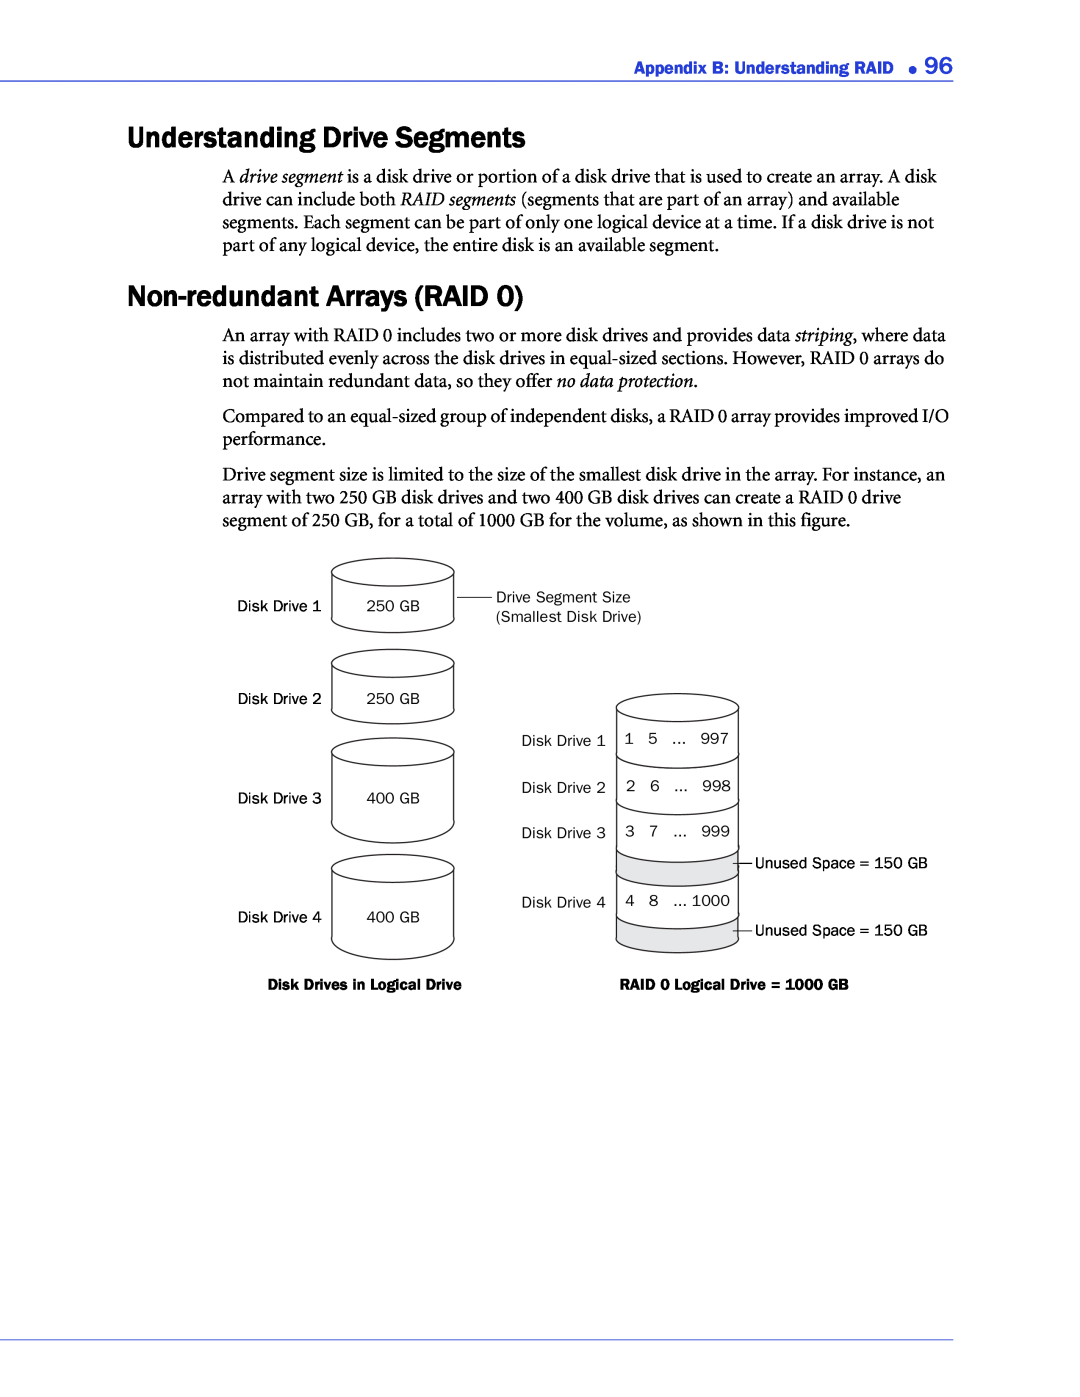 Adaptec 2268300R manual Understanding Drive Segments, Non-redundant Arrays RAID, Appendix B Understanding RAID 